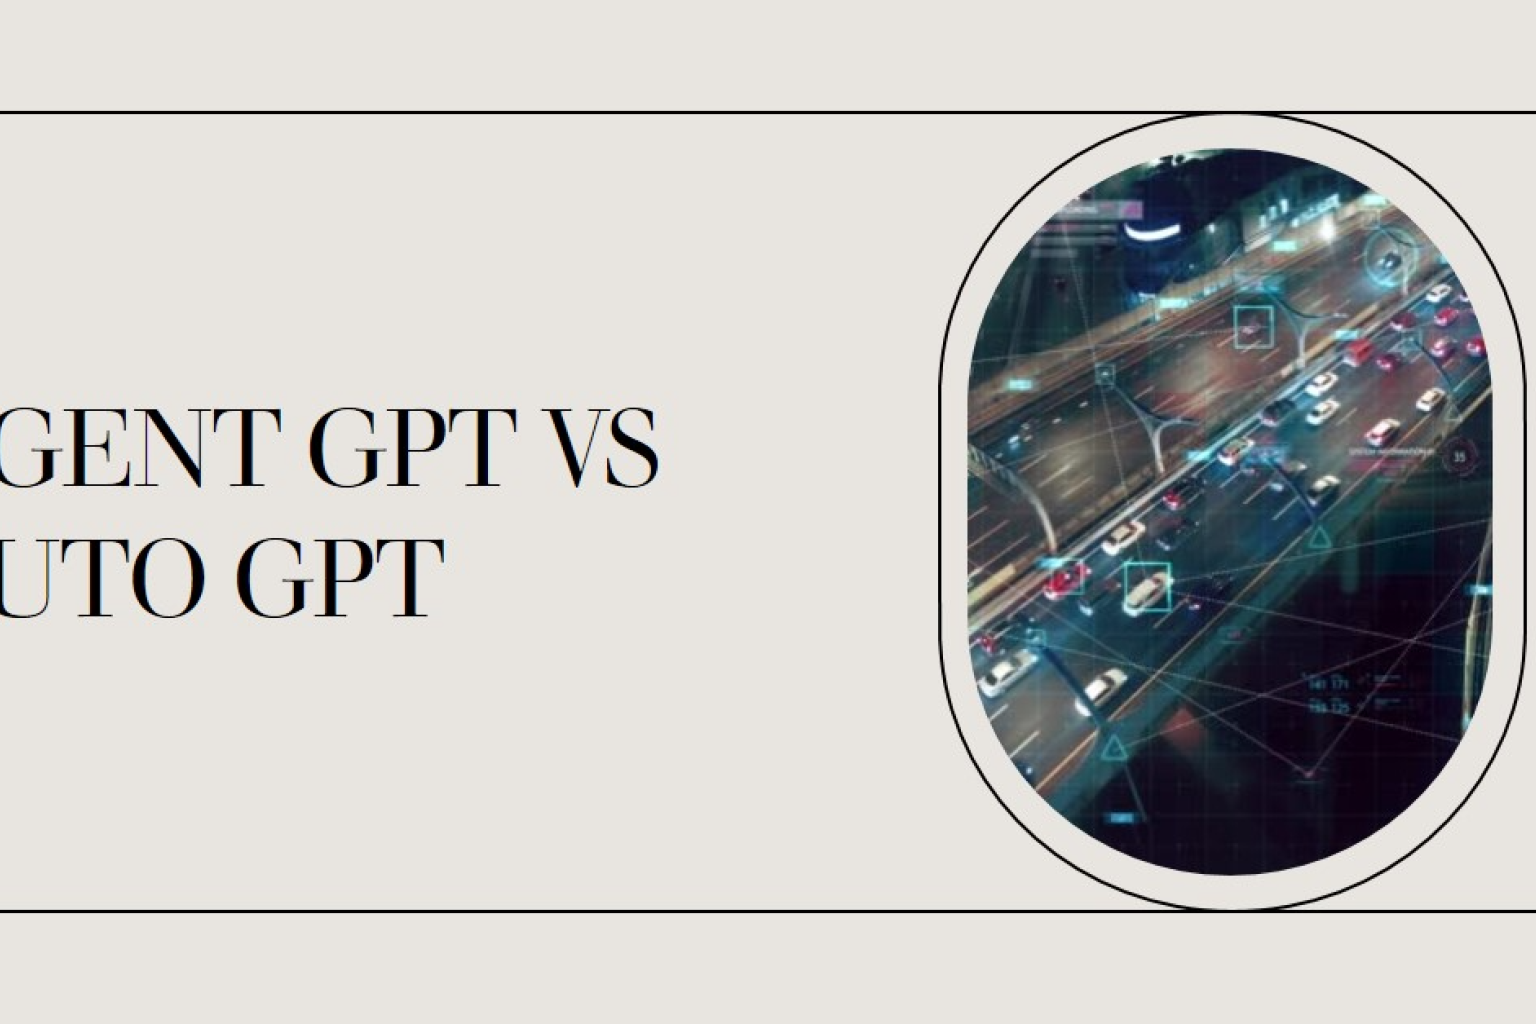 OpenAIのエージェントGPTとオートGPTの特徴、違い、最適な使用例についての包括的な分析。